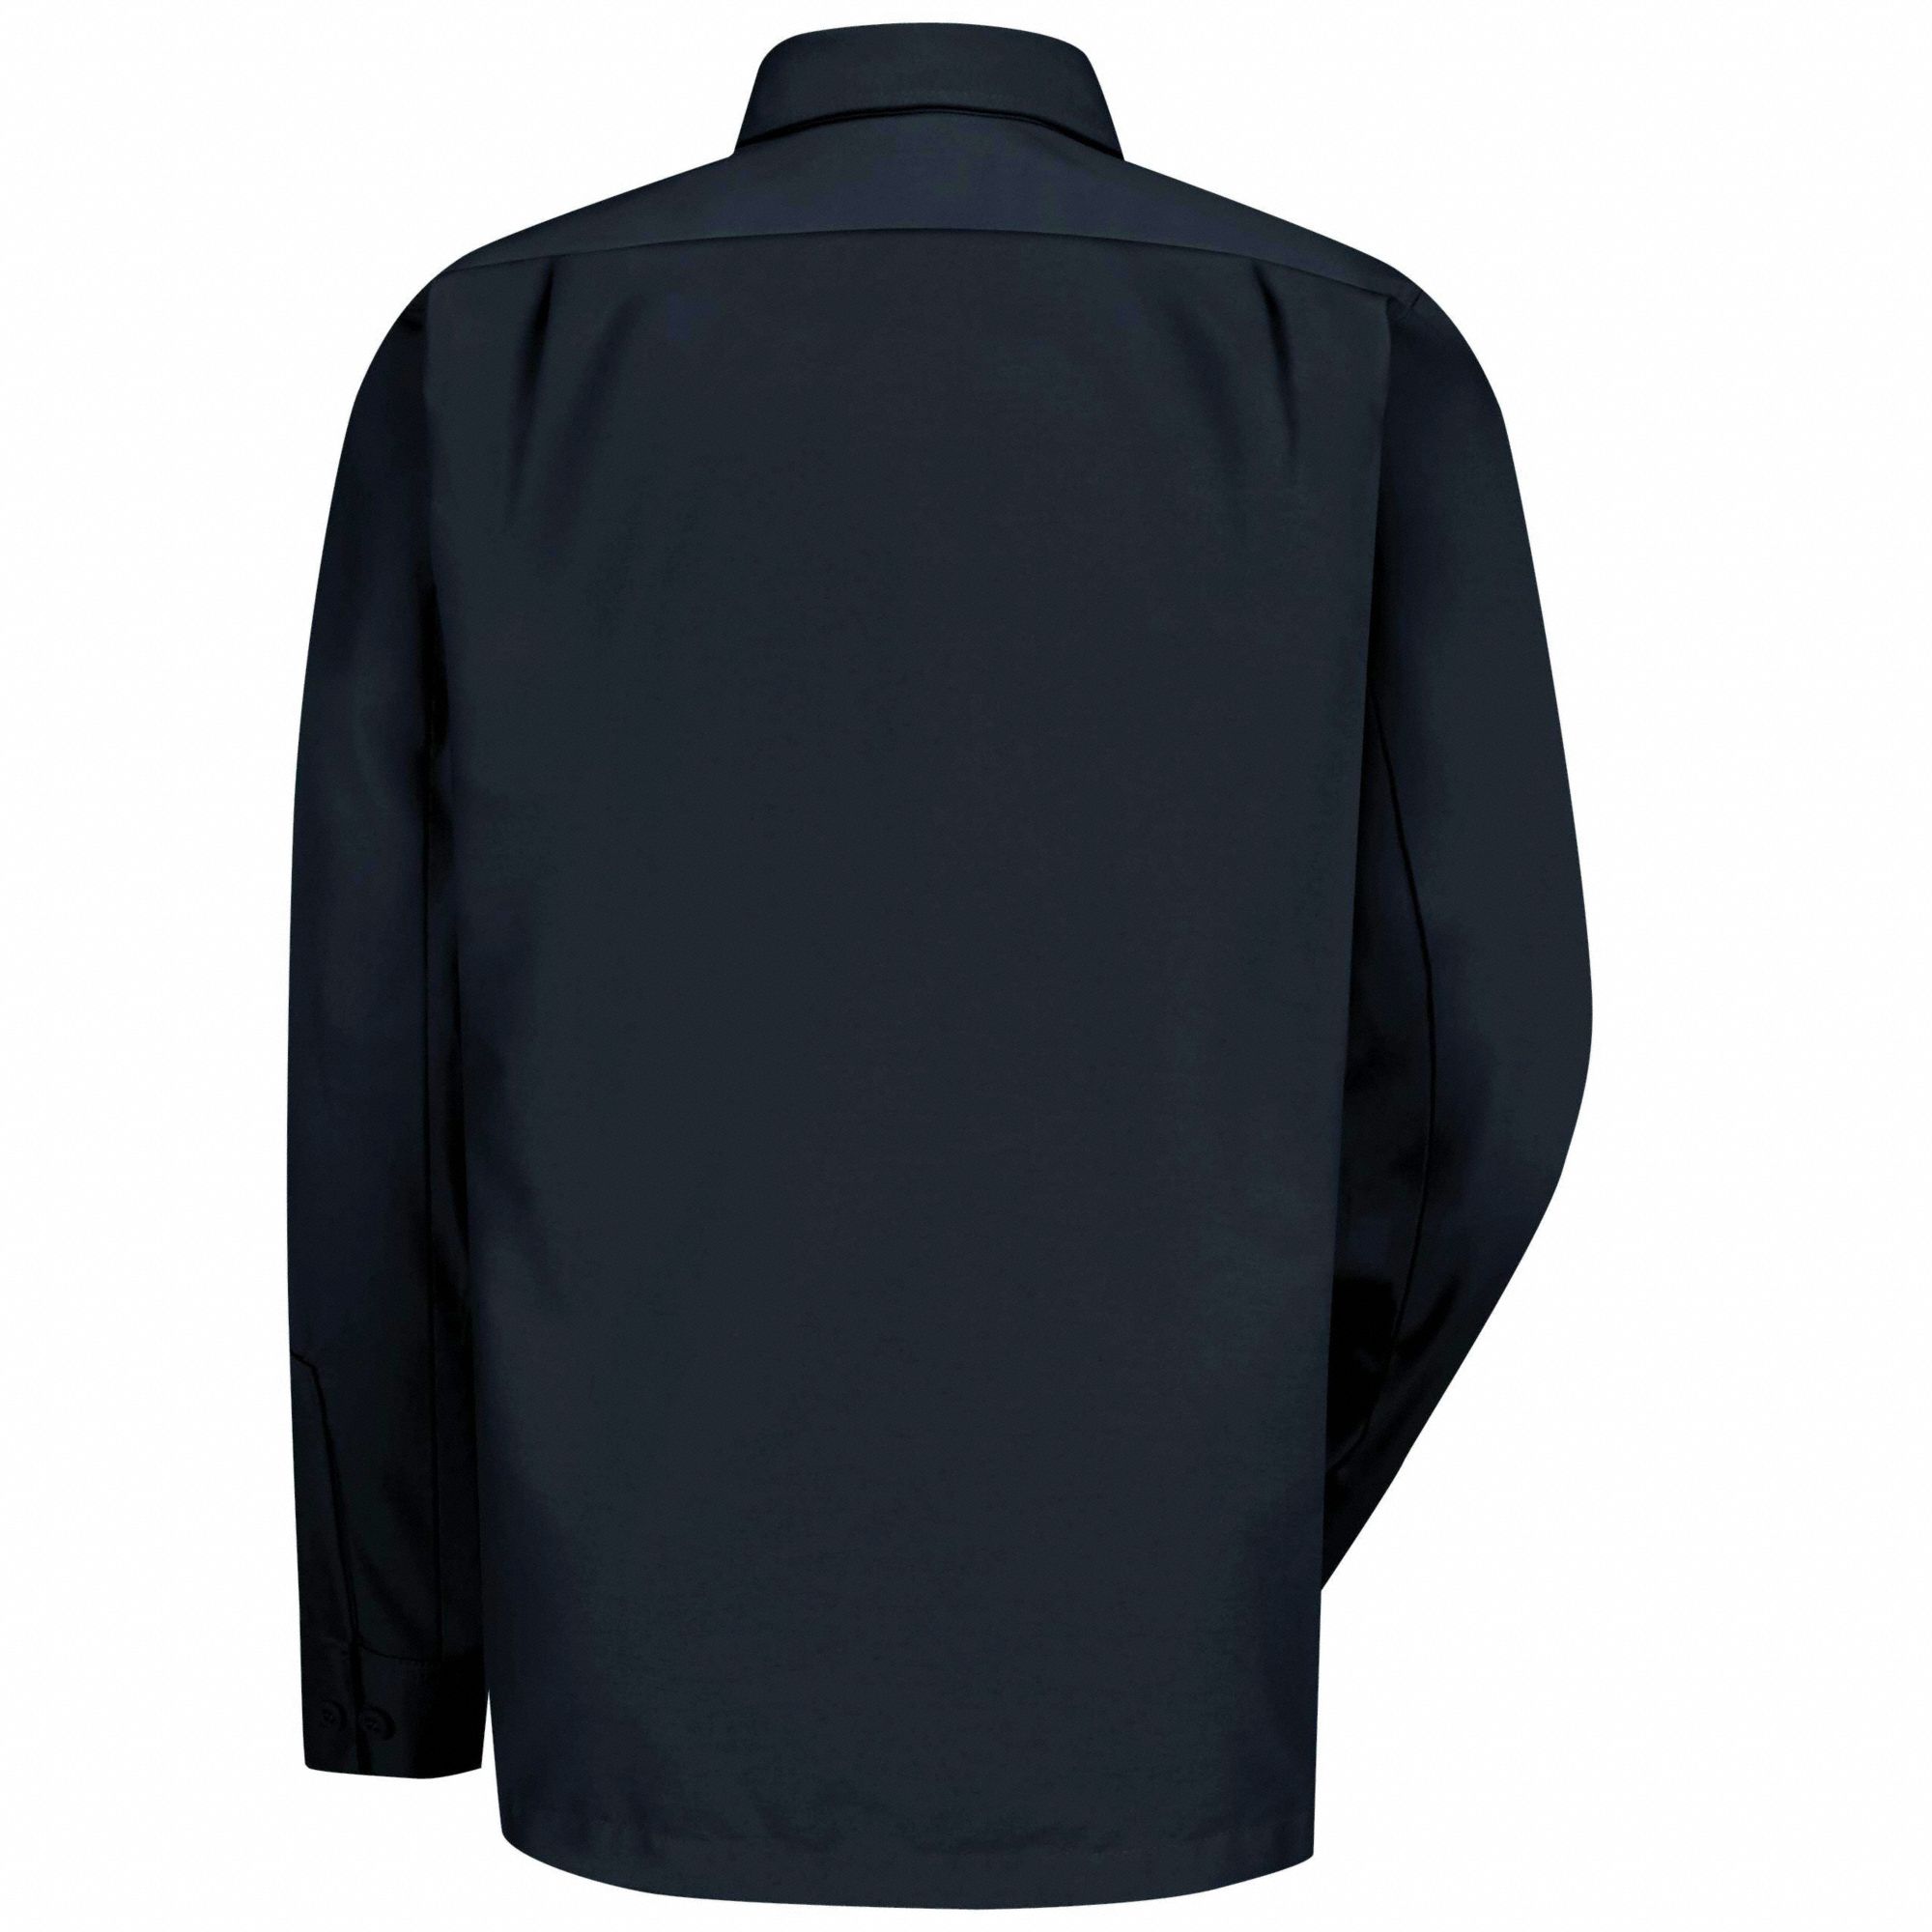 DICKIES Long Sleeve Shirt, Black, Polyester/Cotton - 26KN21|WS10BK LN ...